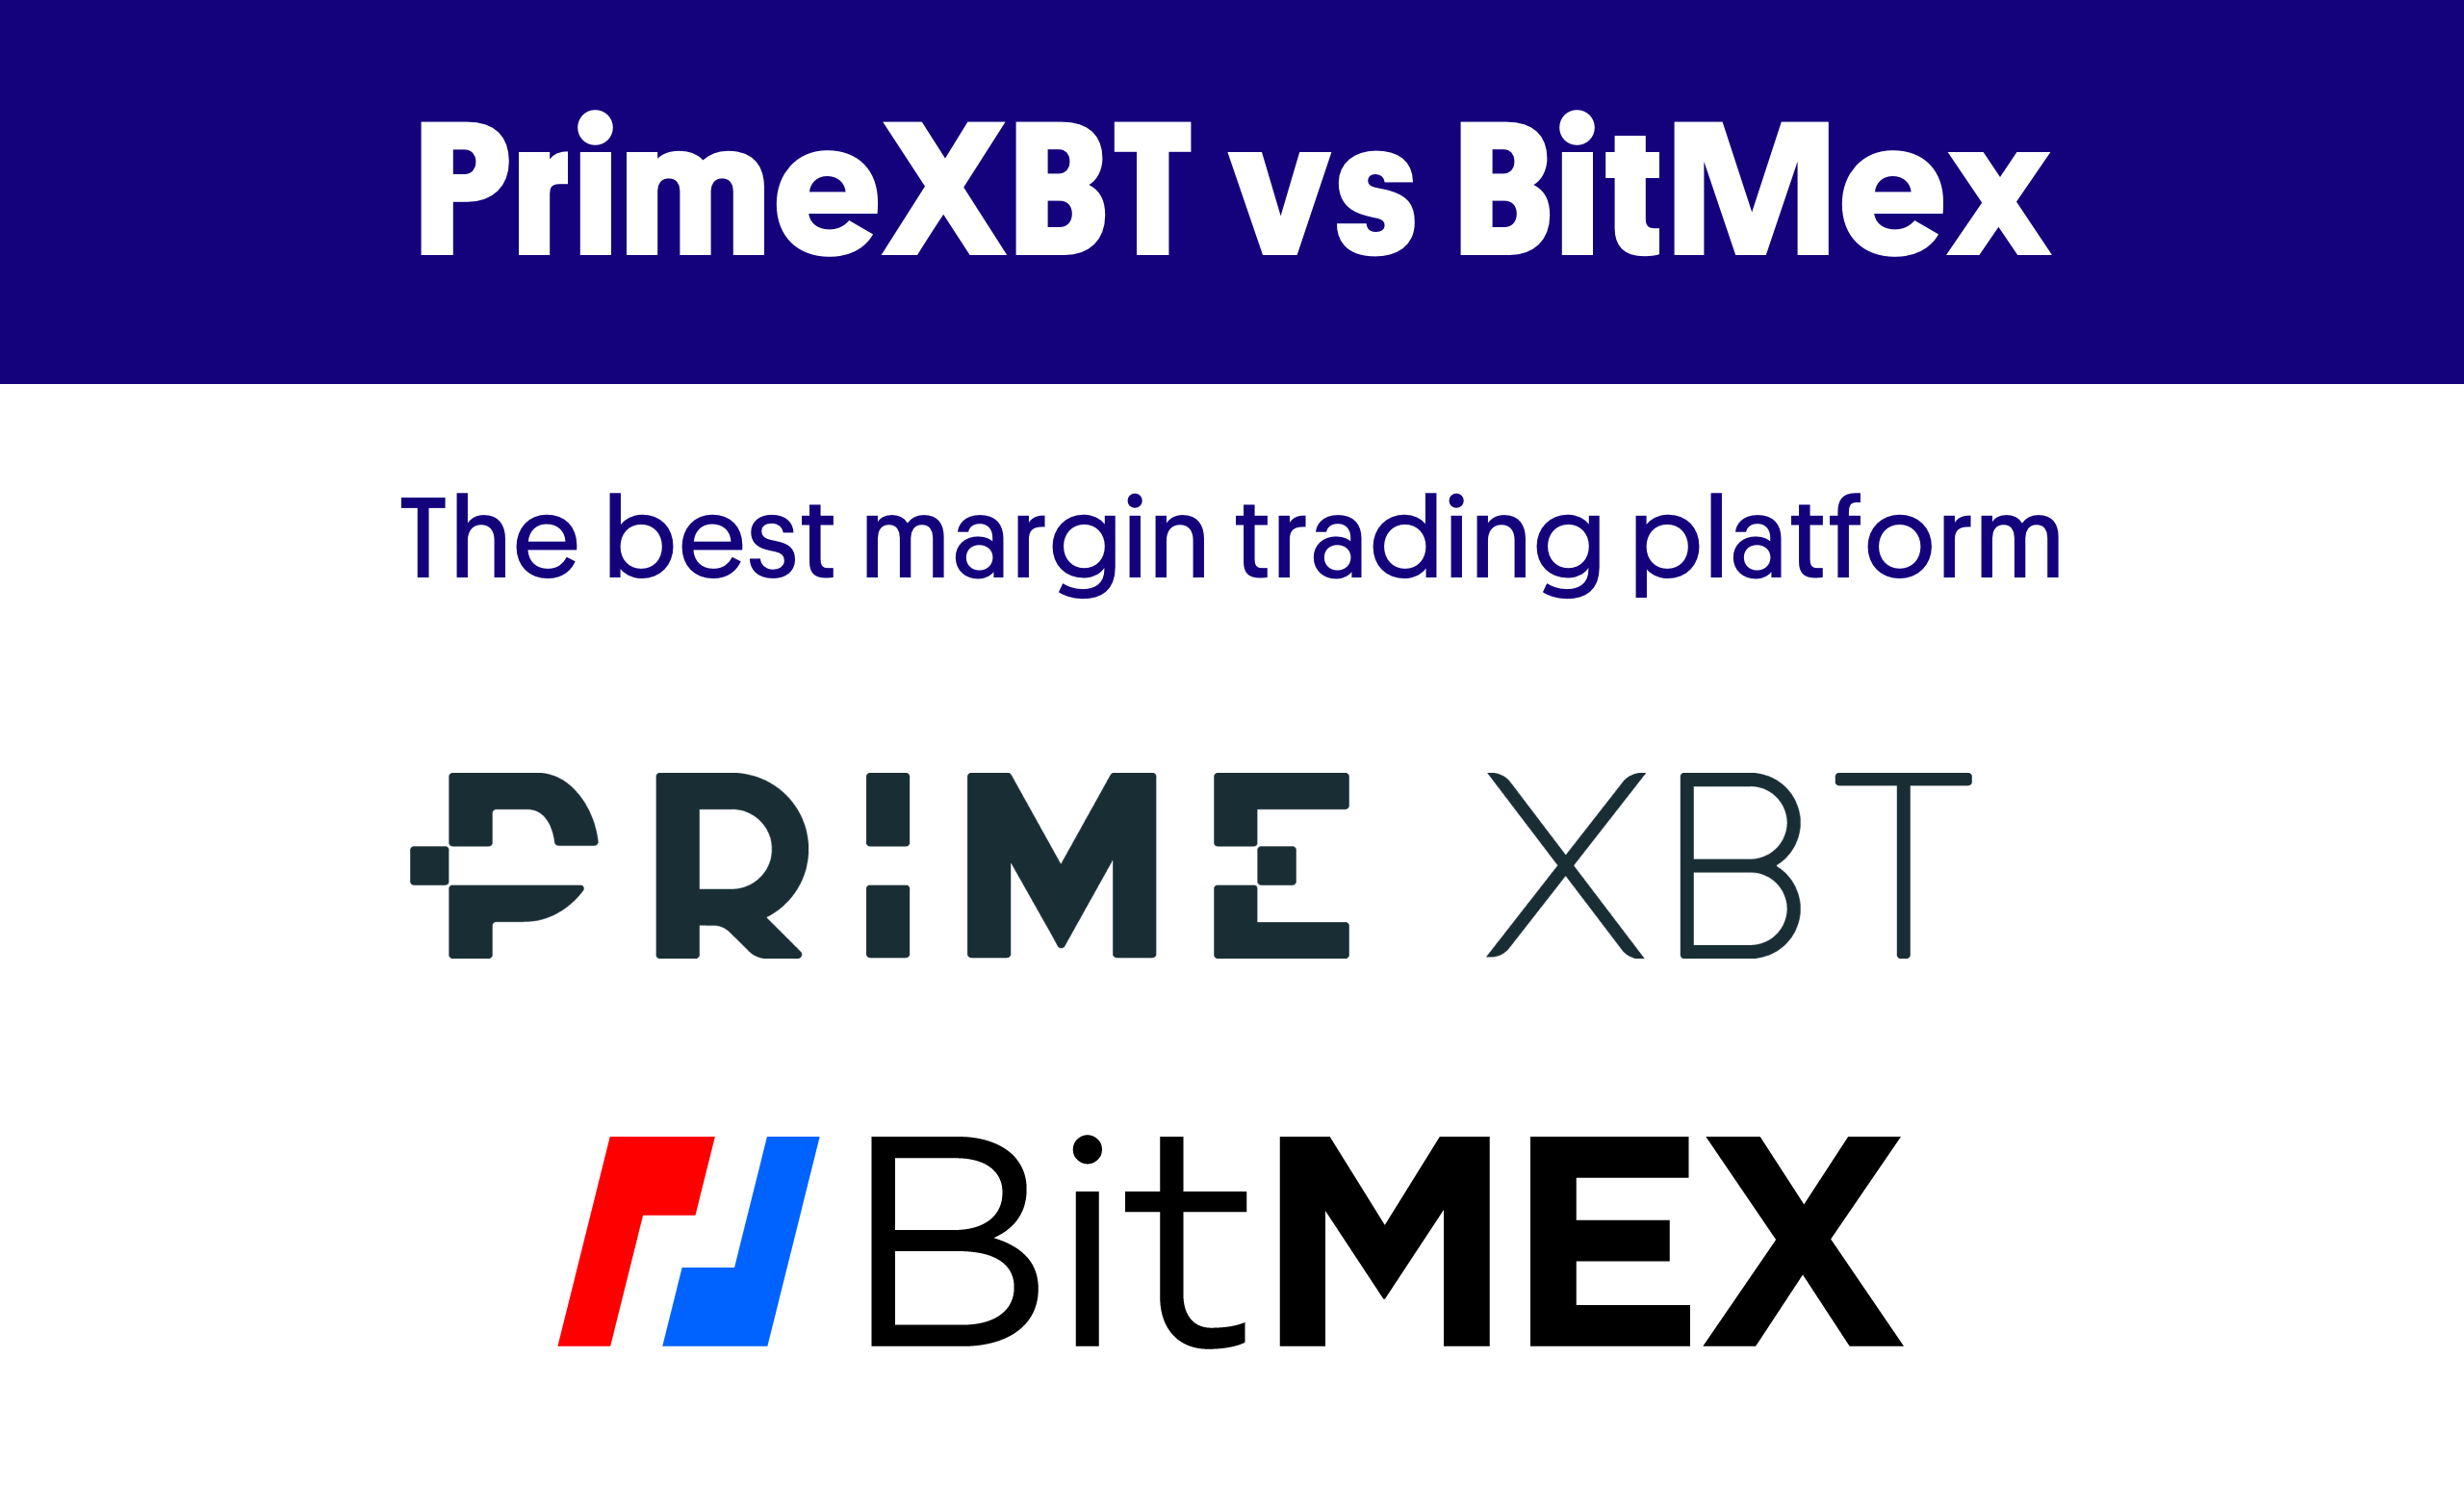 PrimeXBT vs BitMex The best margin trading platform